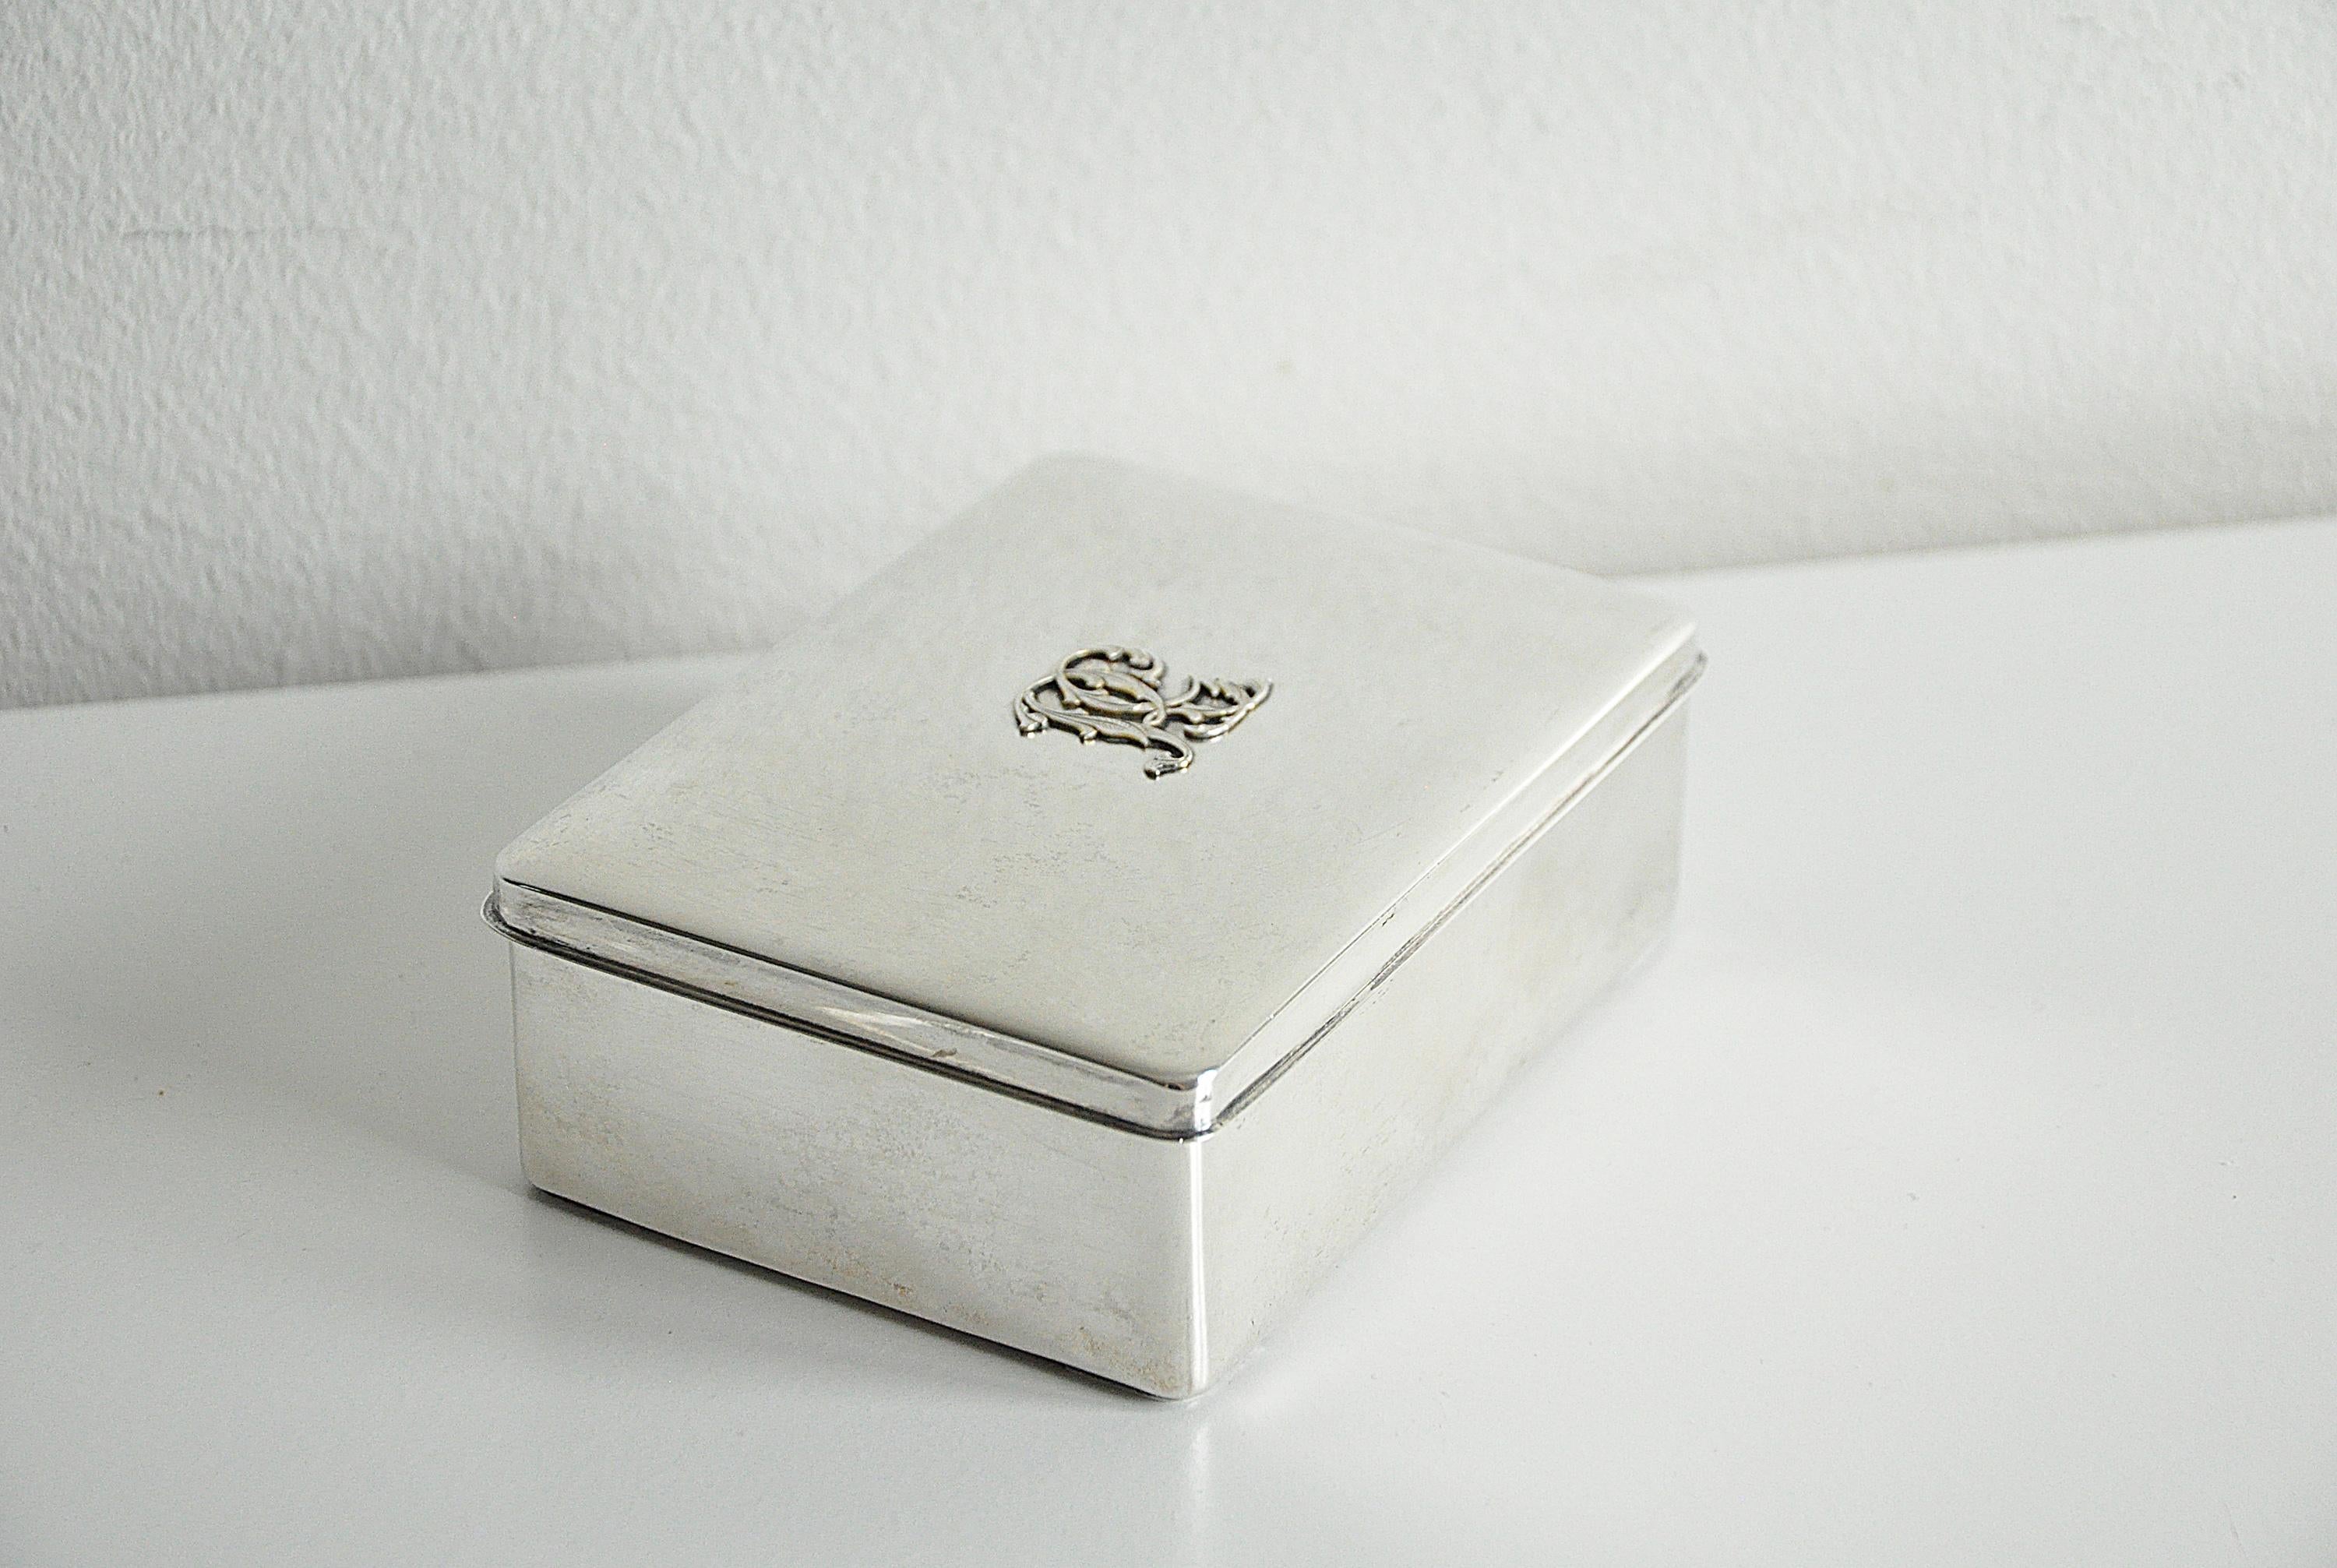 Mid-20th Century Scandinavian Modern Silver Box from C. G. Hallberg, Sweden -1937 For Sale